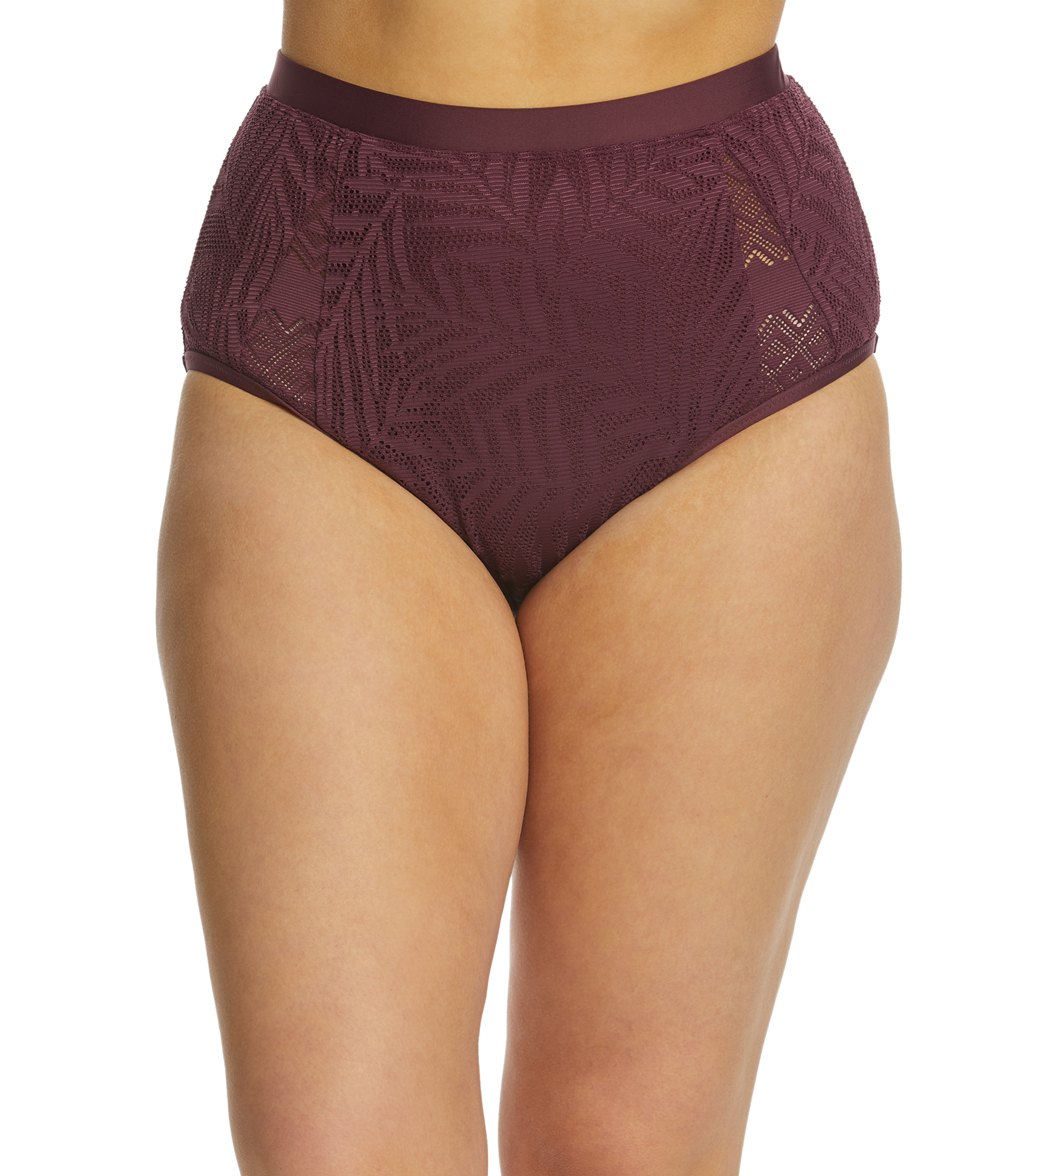 Jessica Simpson Plus Size Crochet High Waist Bikini Bottom - Wine 1X - Swimoutlet.com